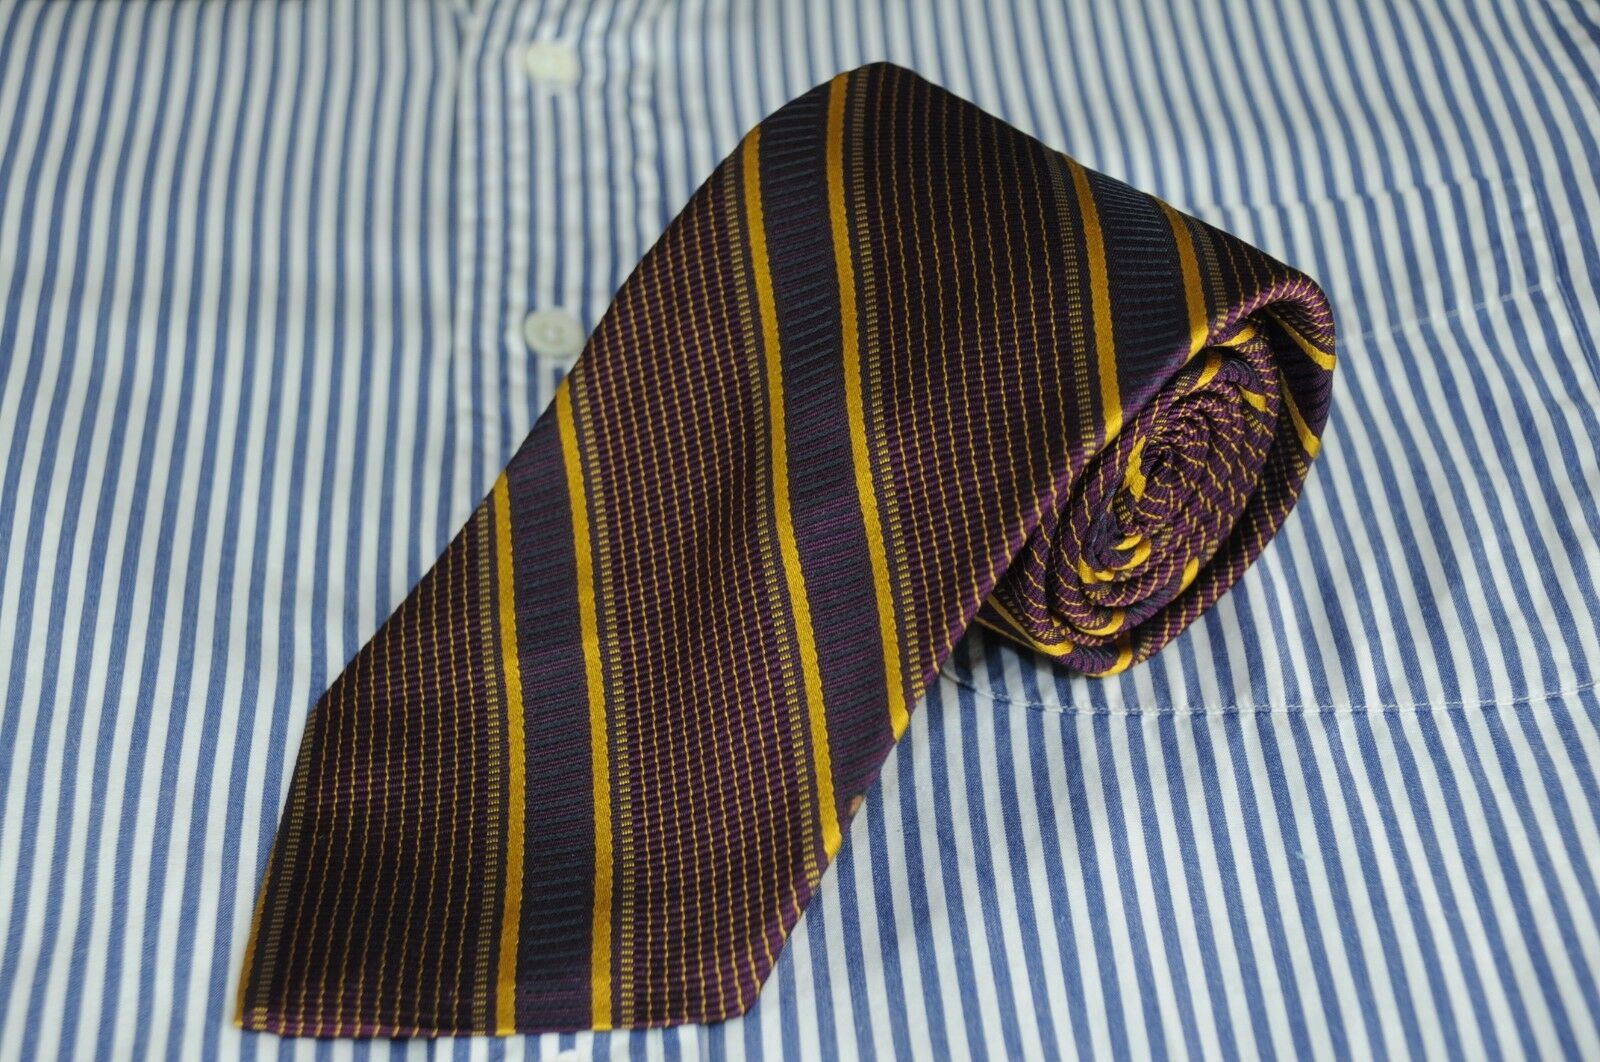 Paul Stuart Men's Tie Violet & Gold Striped Silk Woven Necktie - Ties